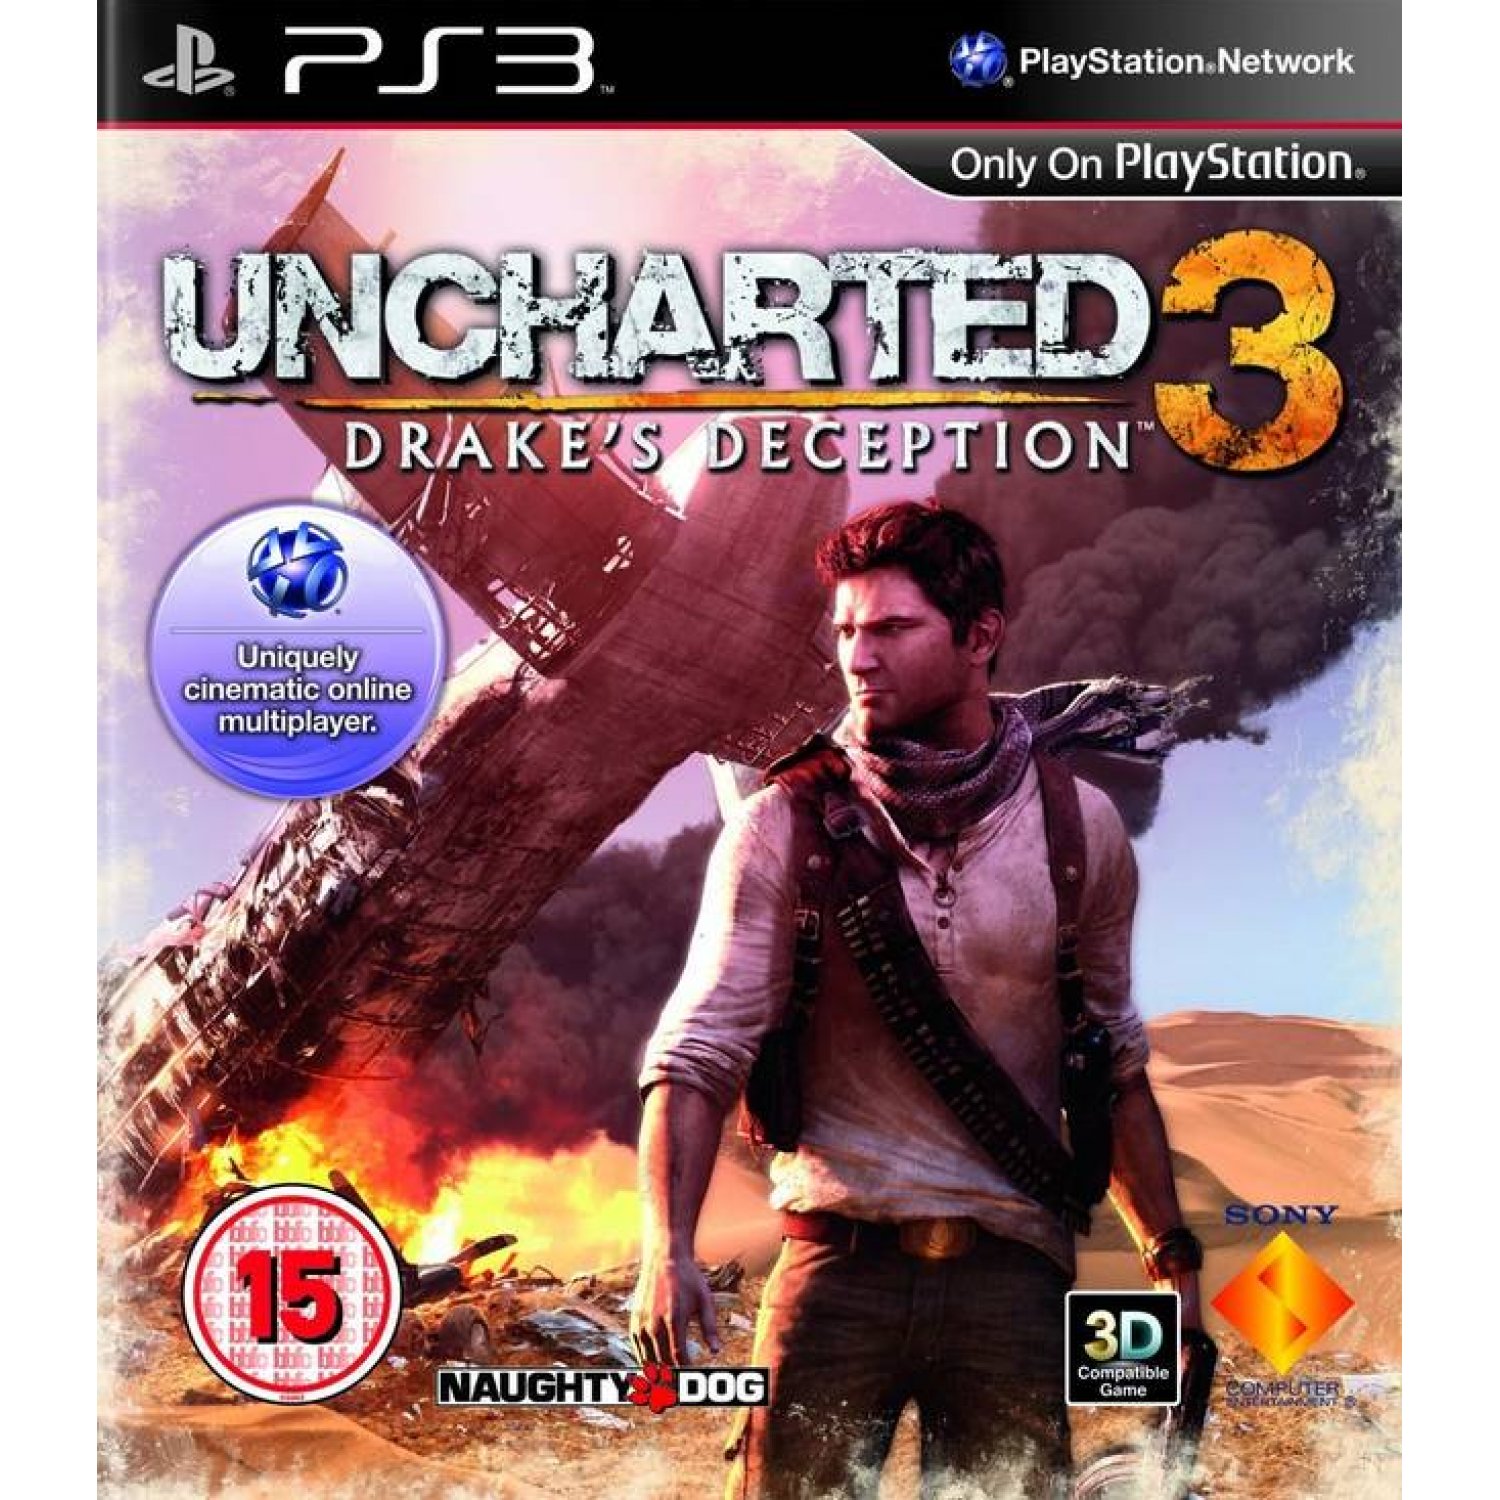 Игры пс 3 на русском. Игра ps3 Uncharted 3: Drake’s Deception диск. Uncharted 3 иллюзии Дрейка ps3. Обложка пс3 анчартед. Анчартед 3 диск пс3.